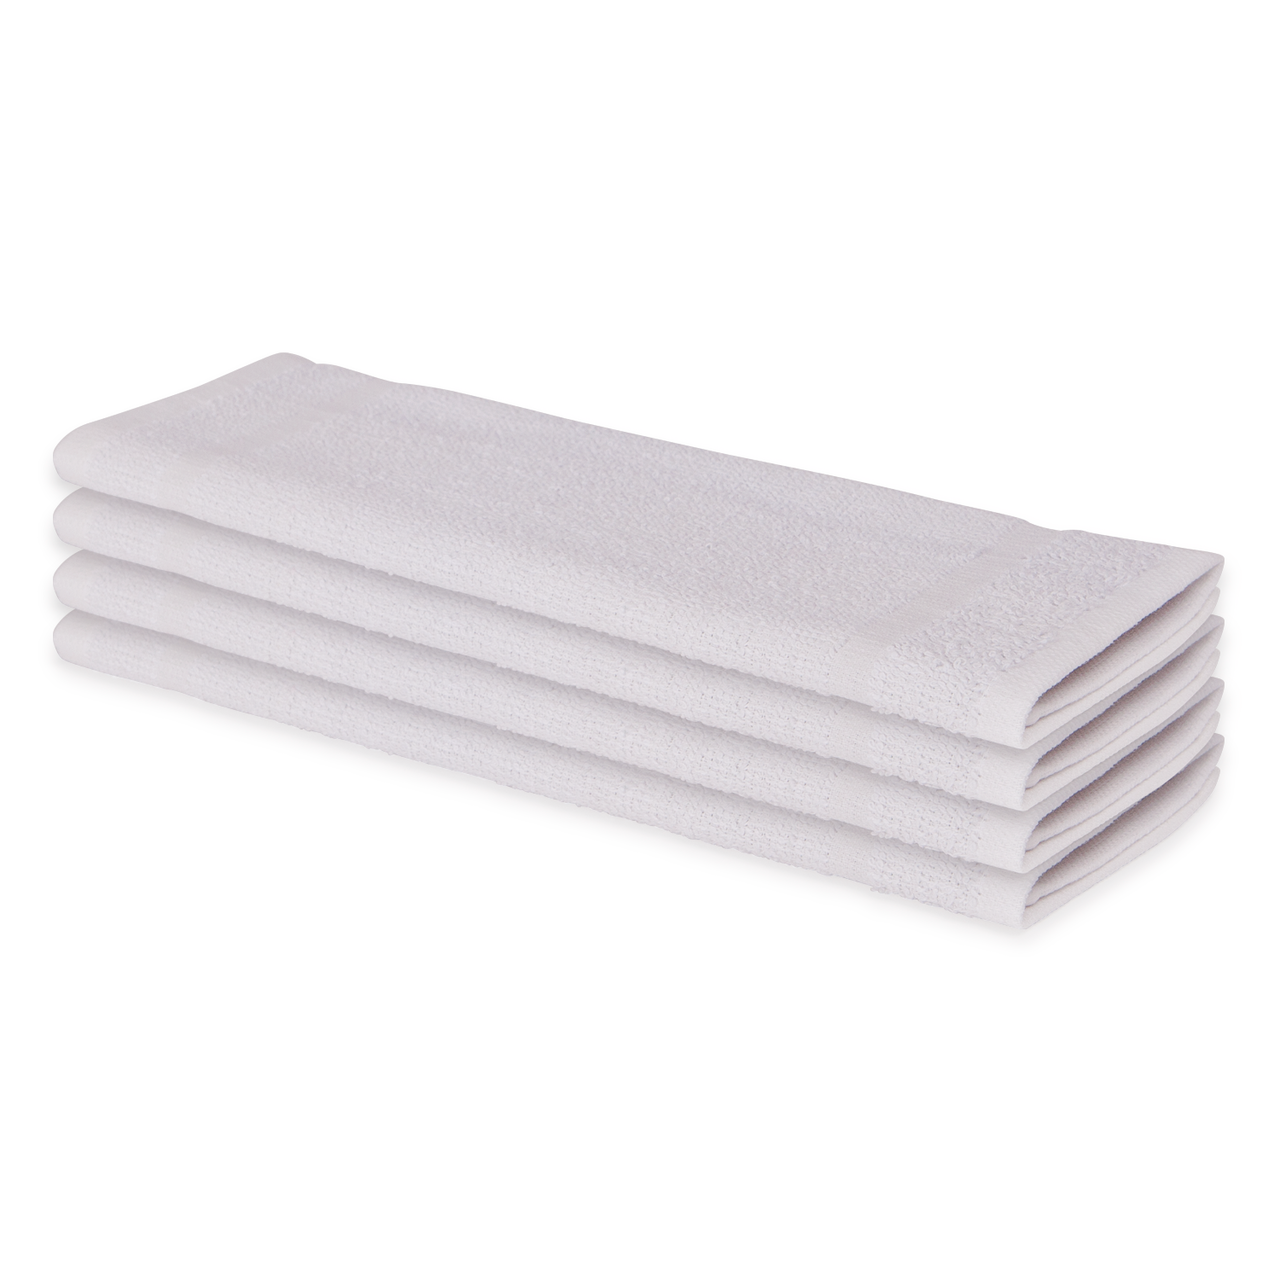 12X12 Wholesale Premium White Wash Cloth - Towel Super Center